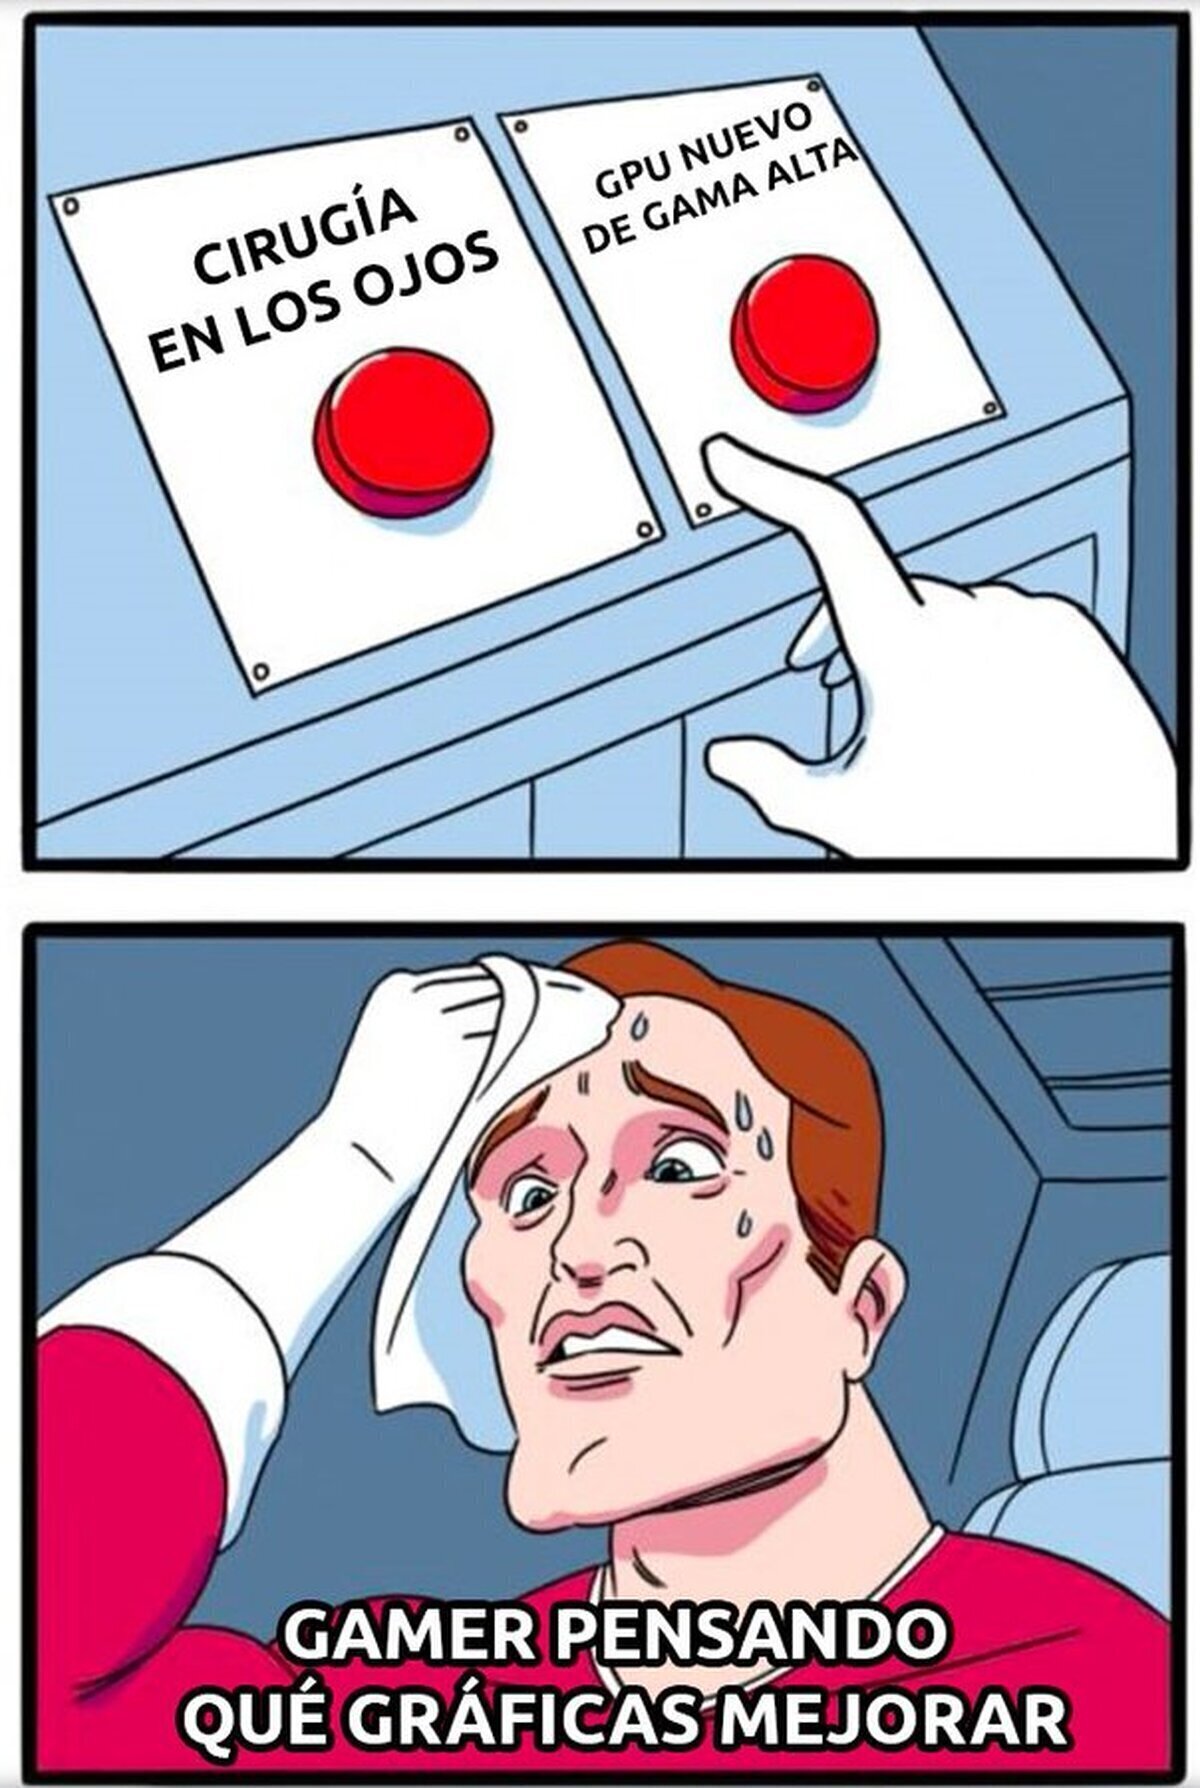 Decisiones difíciles